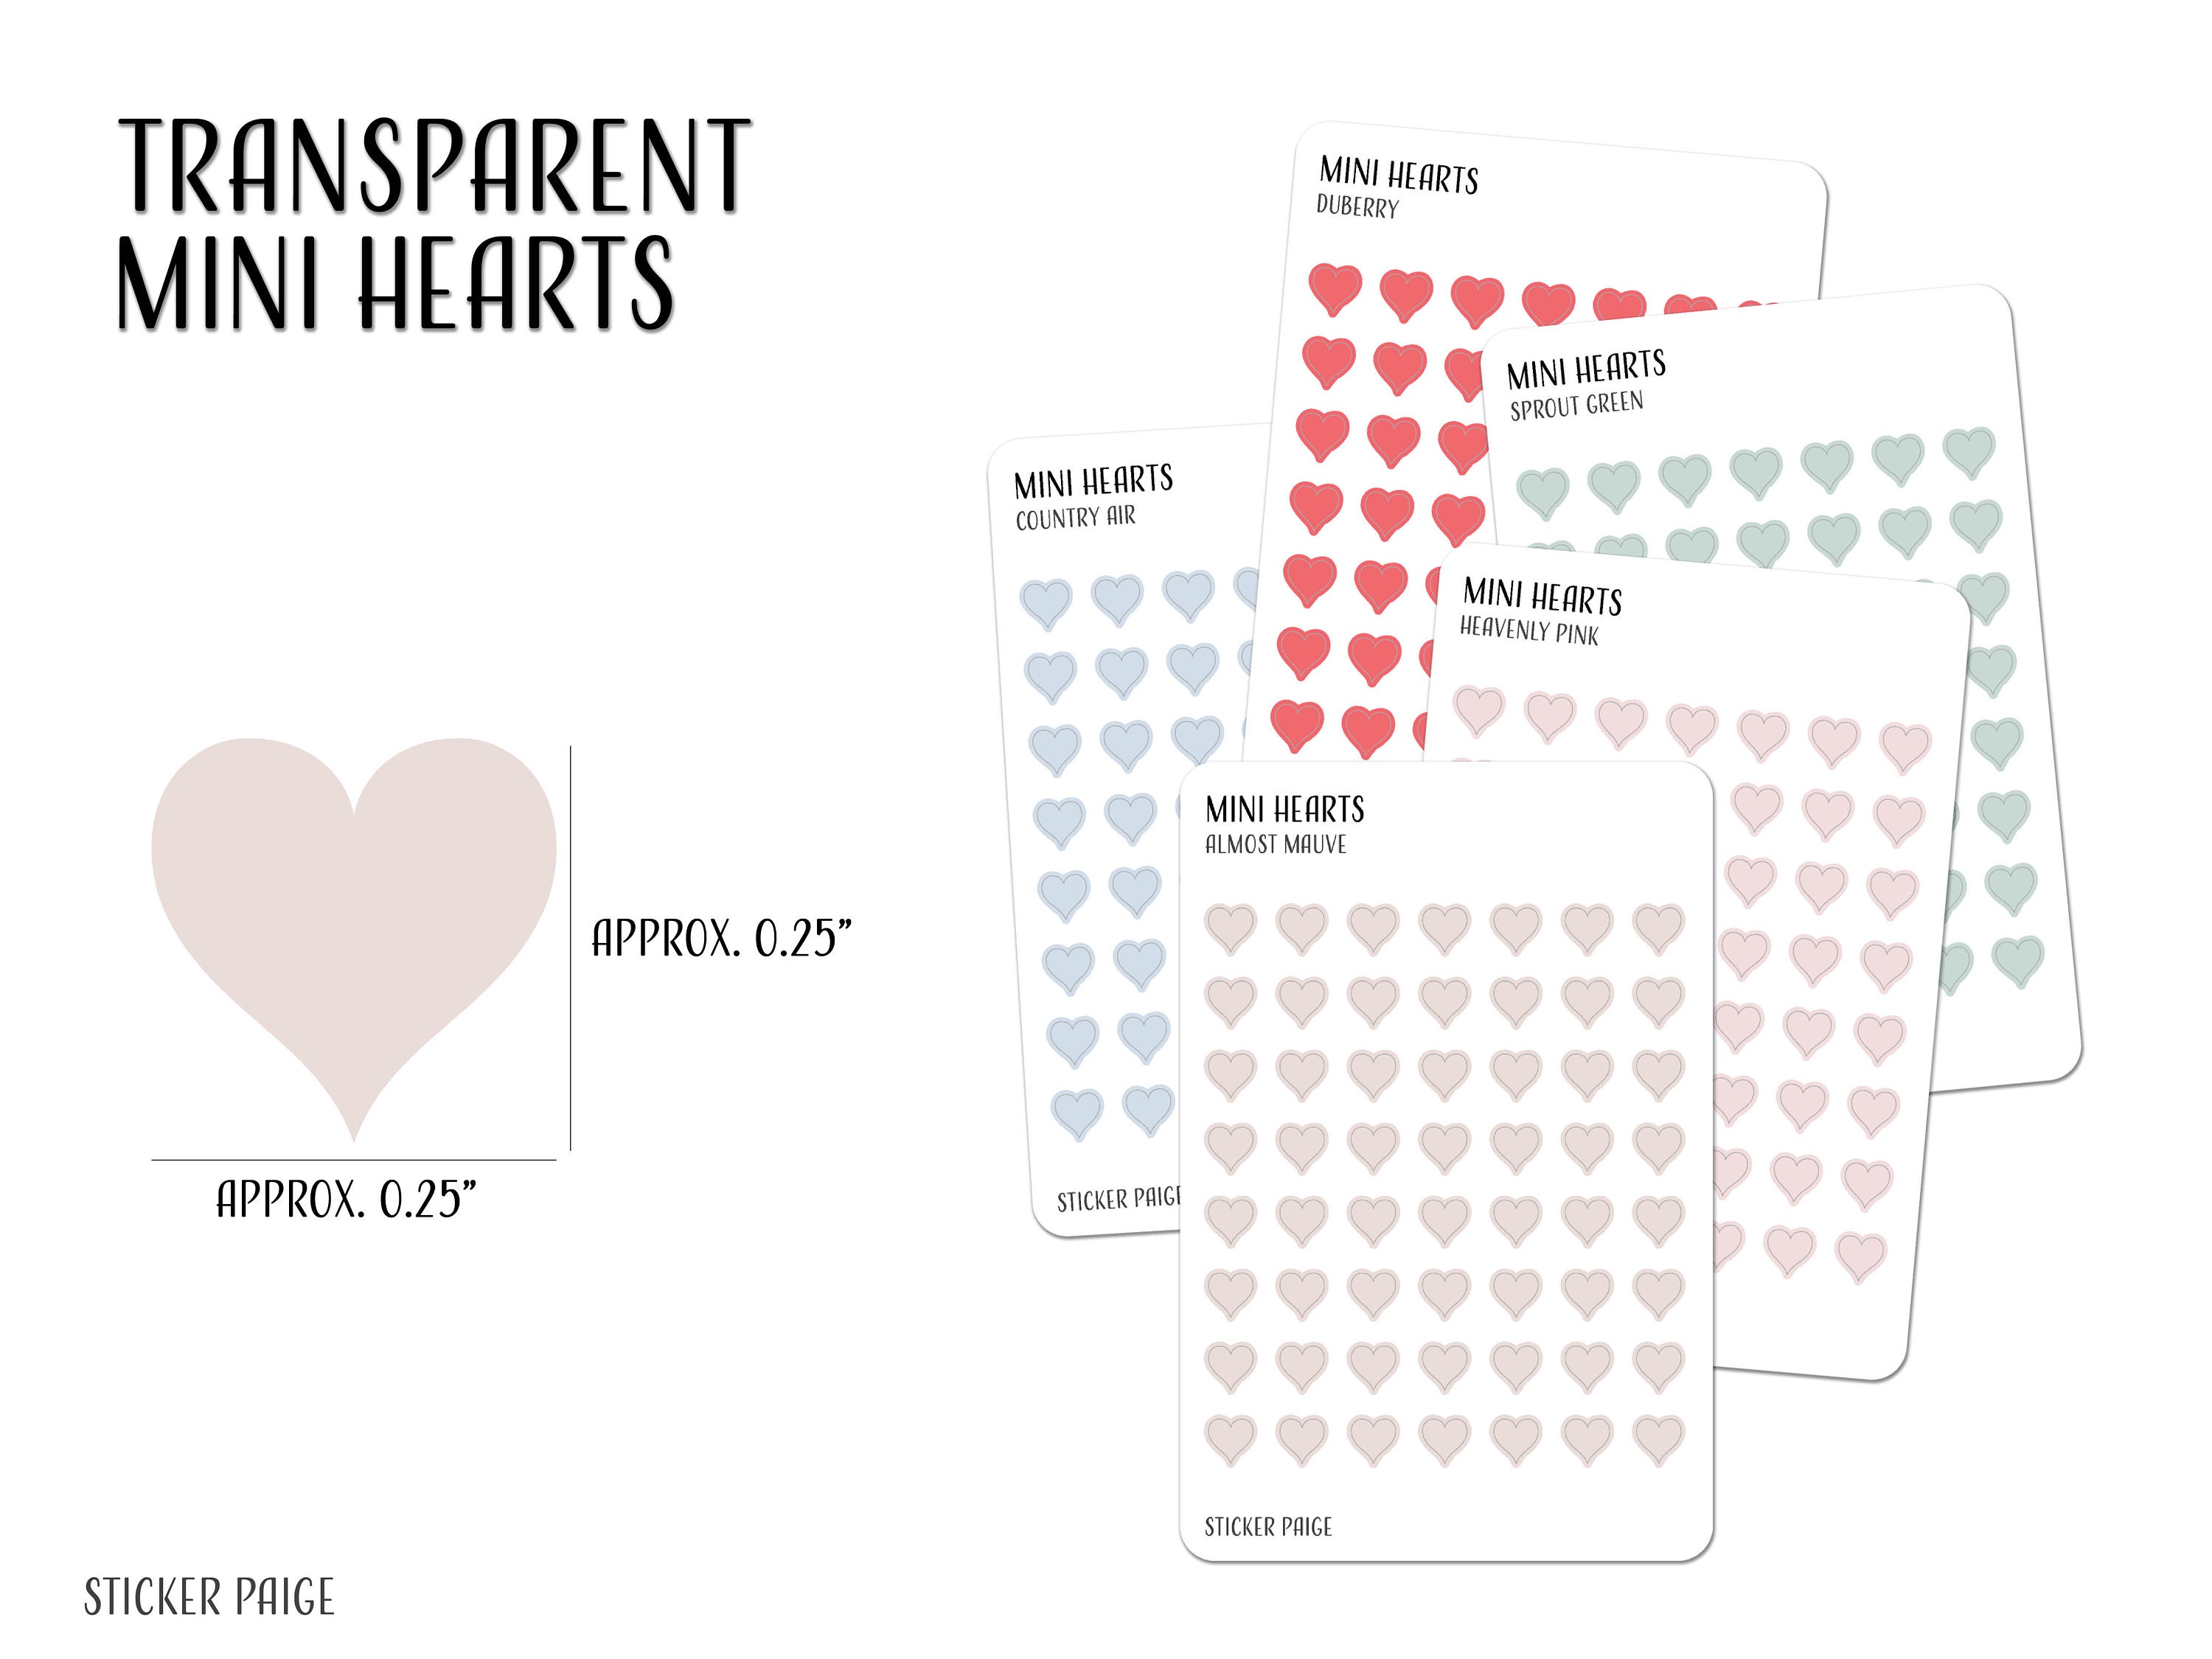 40 Piece Glitter Mini Heart Stickers